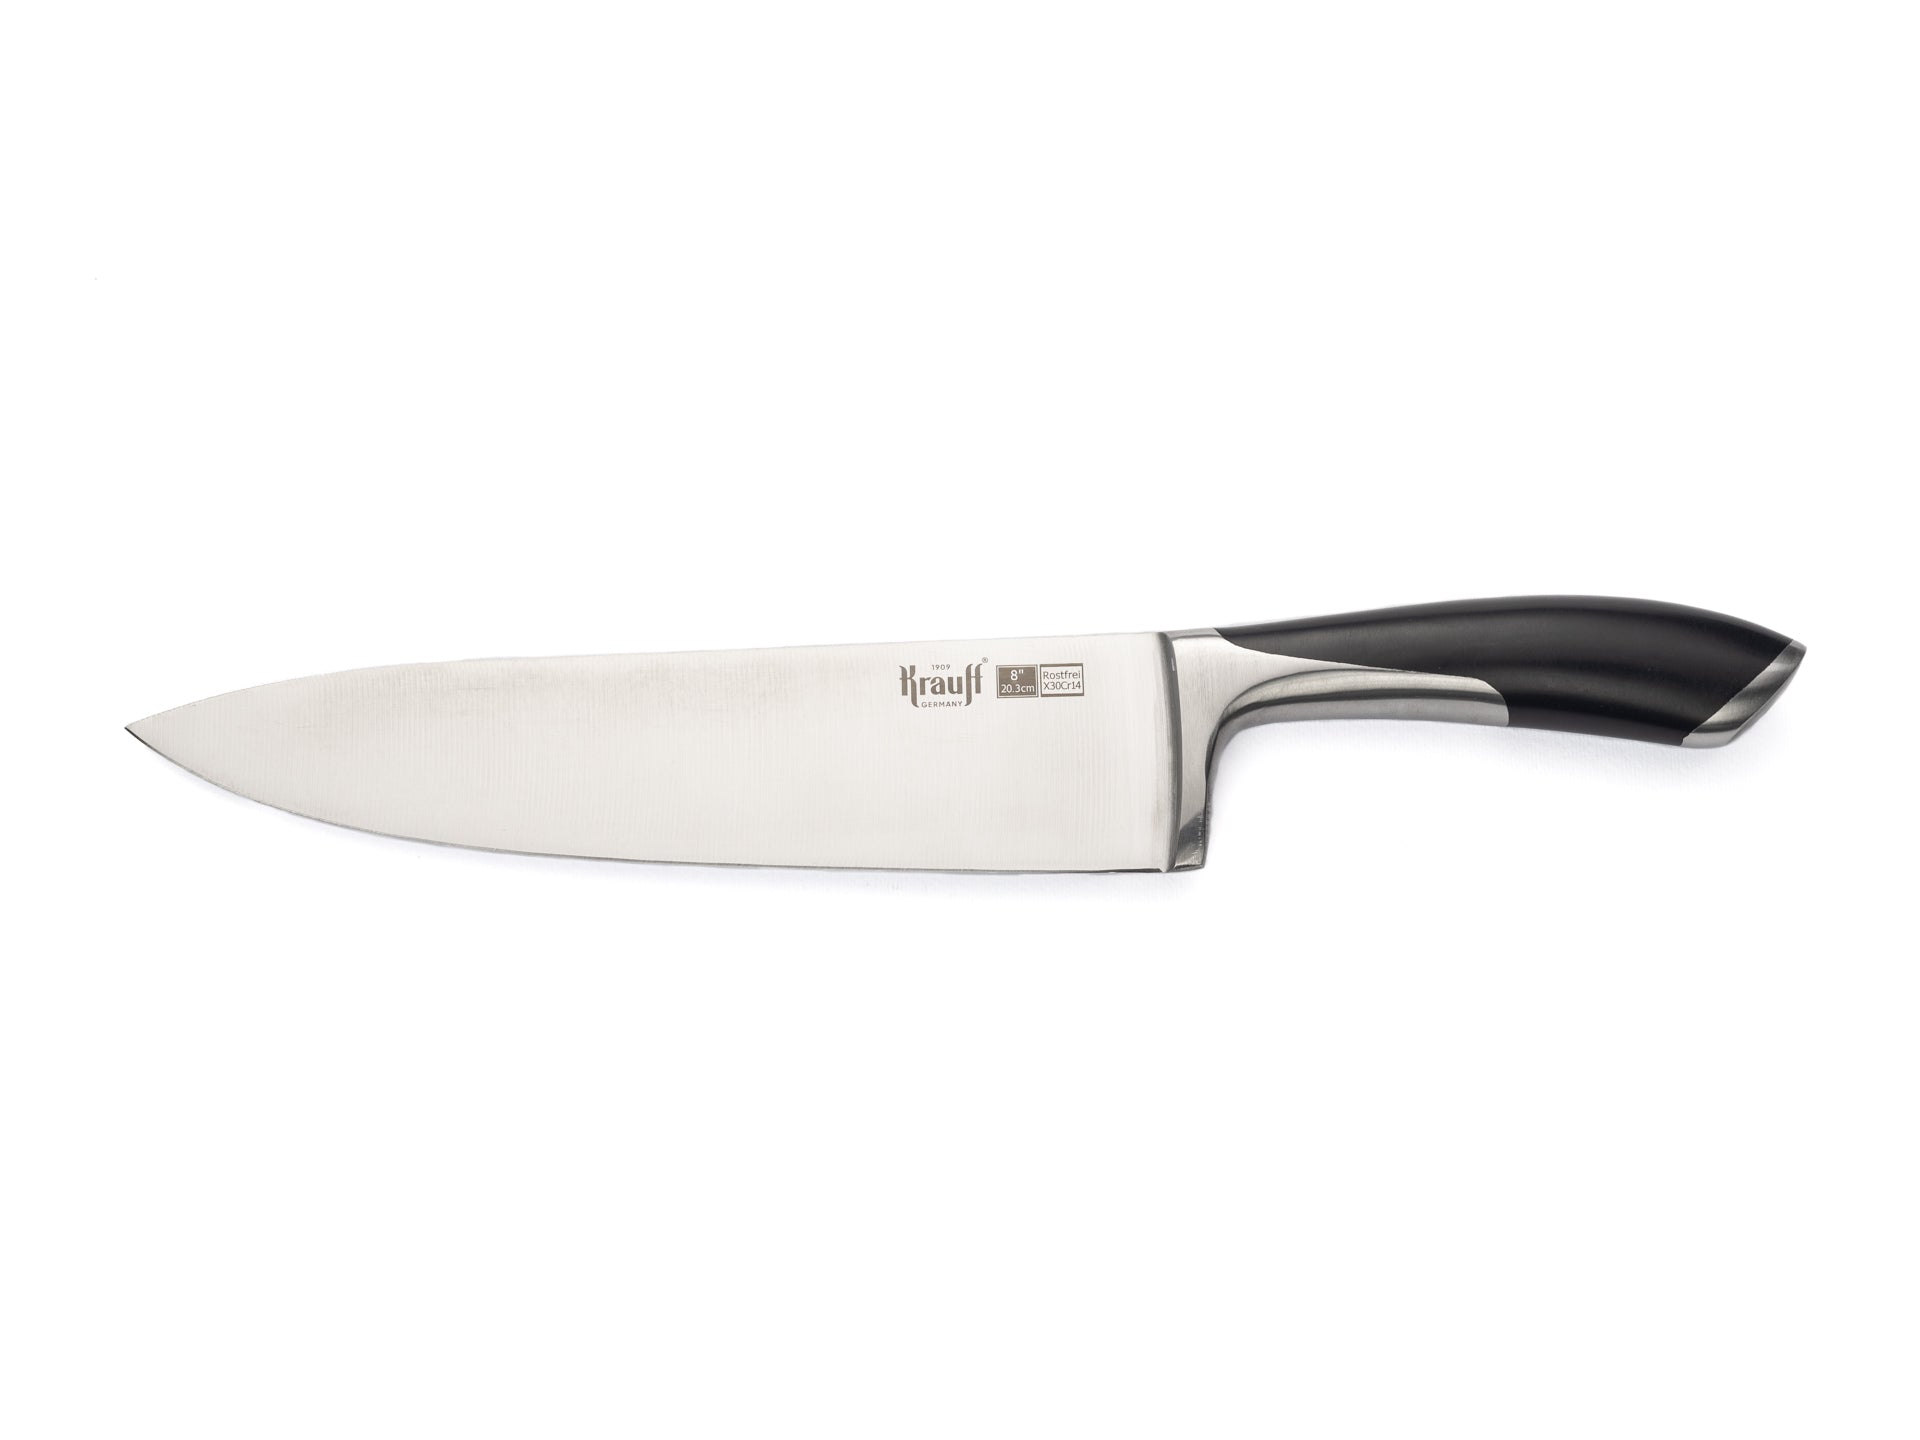 Luxus chef's knife 